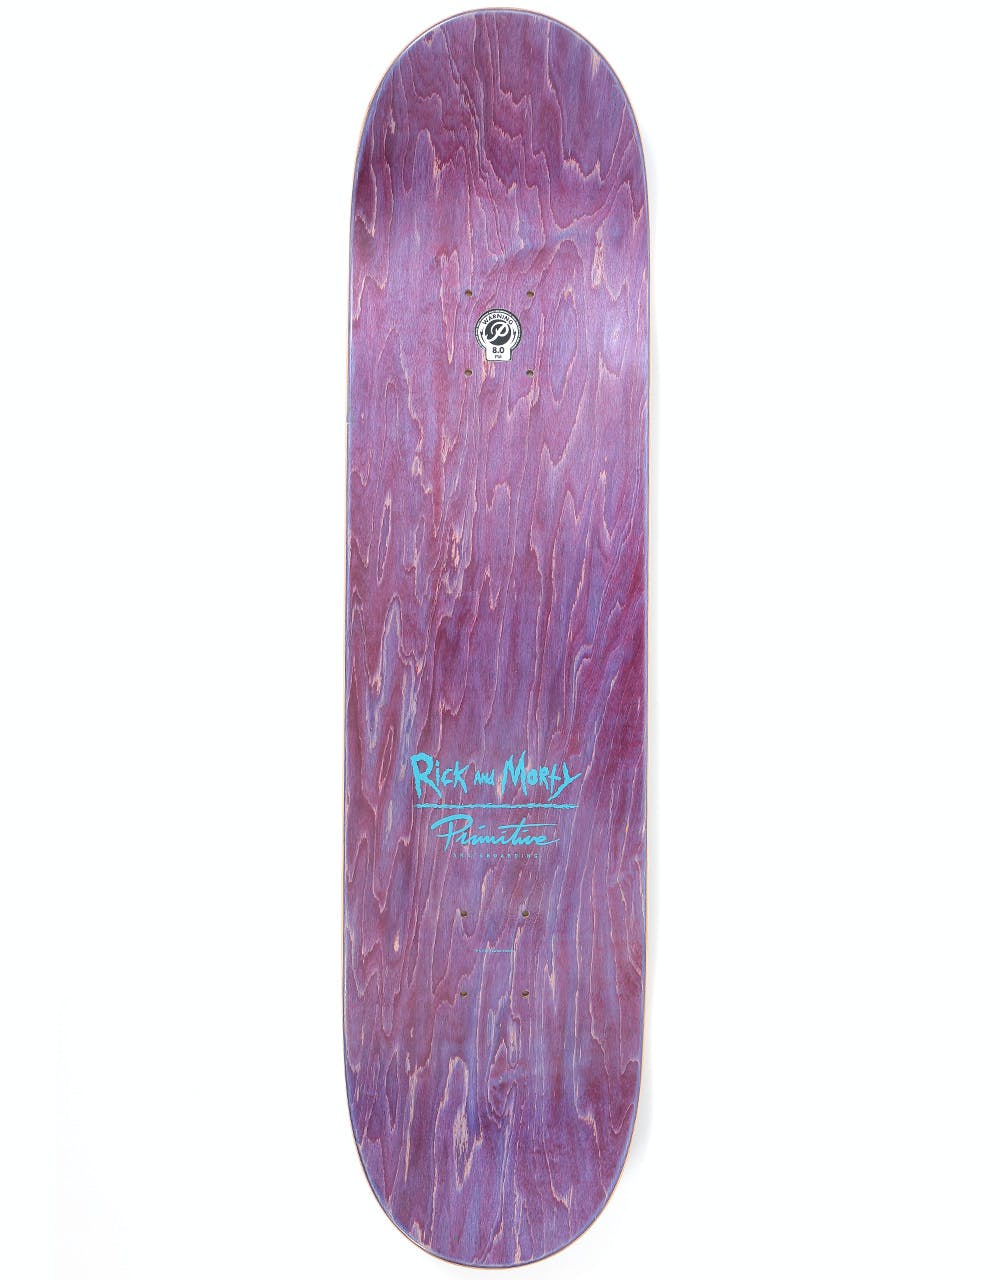 Primitive x Rick & Morty Ribeiro Morty Skateboard Deck - 8"